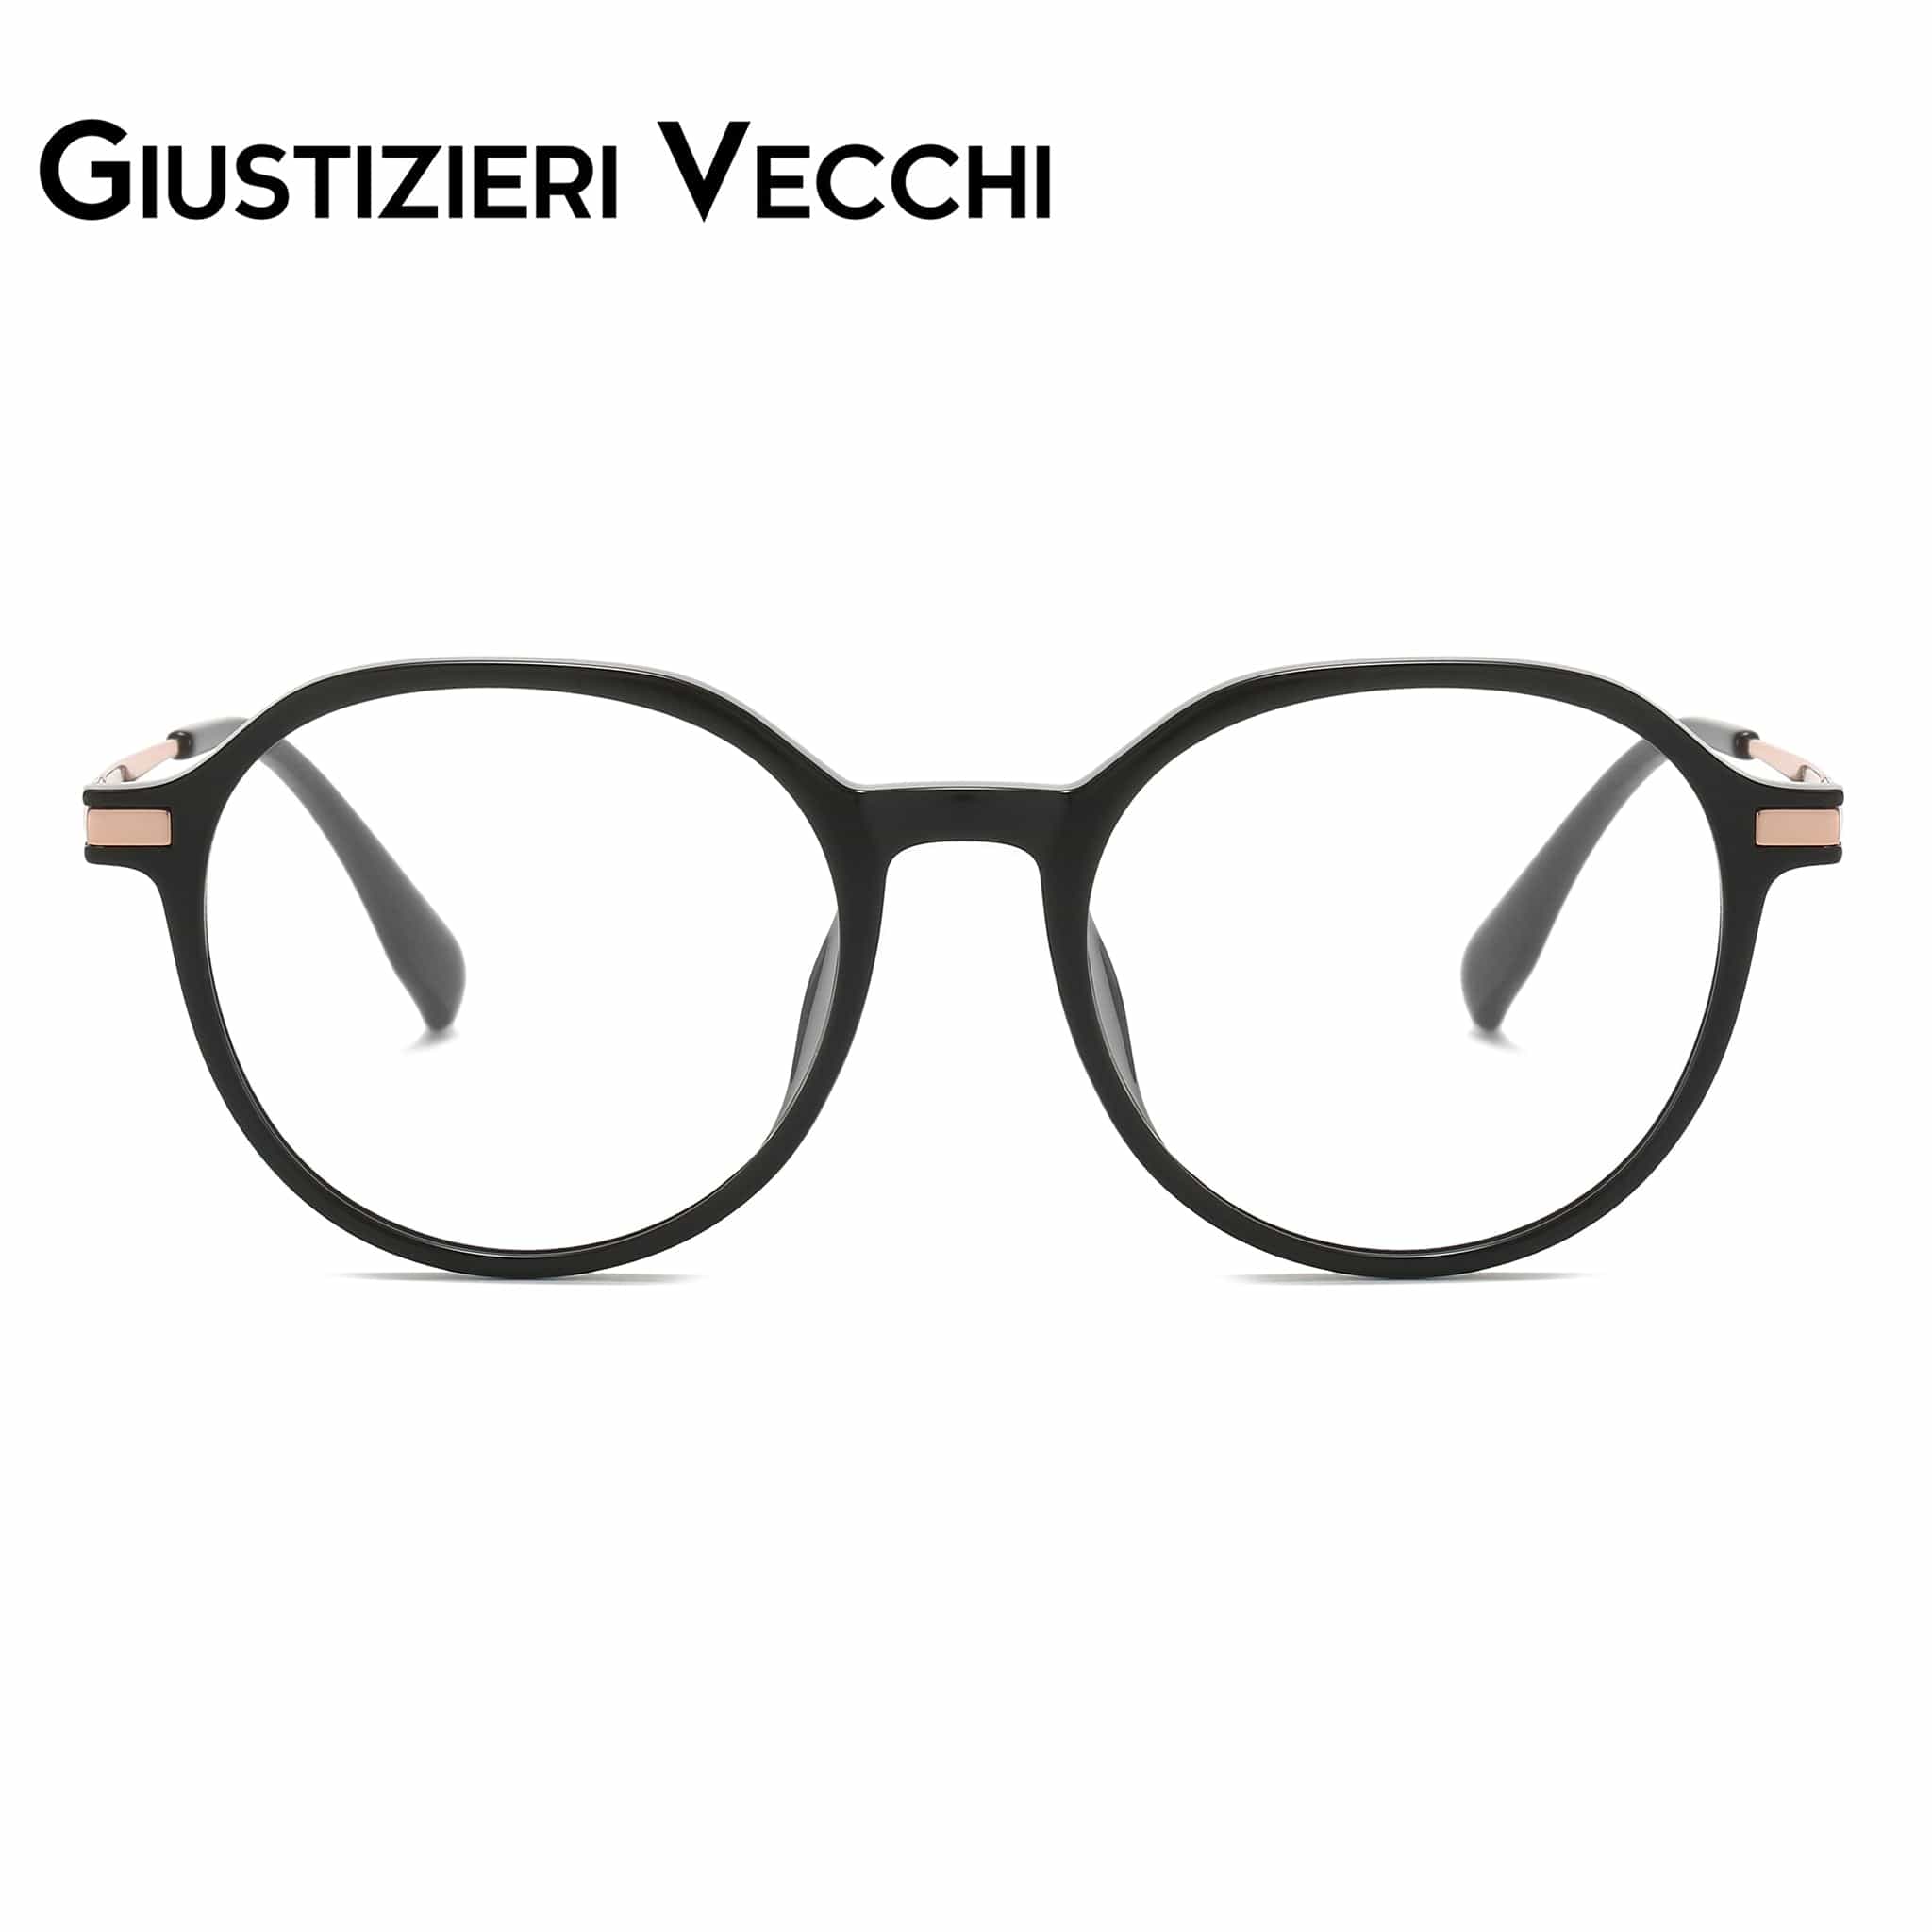 GIUSTIZIERI VECCHI Eyeglasses Small / Black with Rose Gold StarBurst Uno